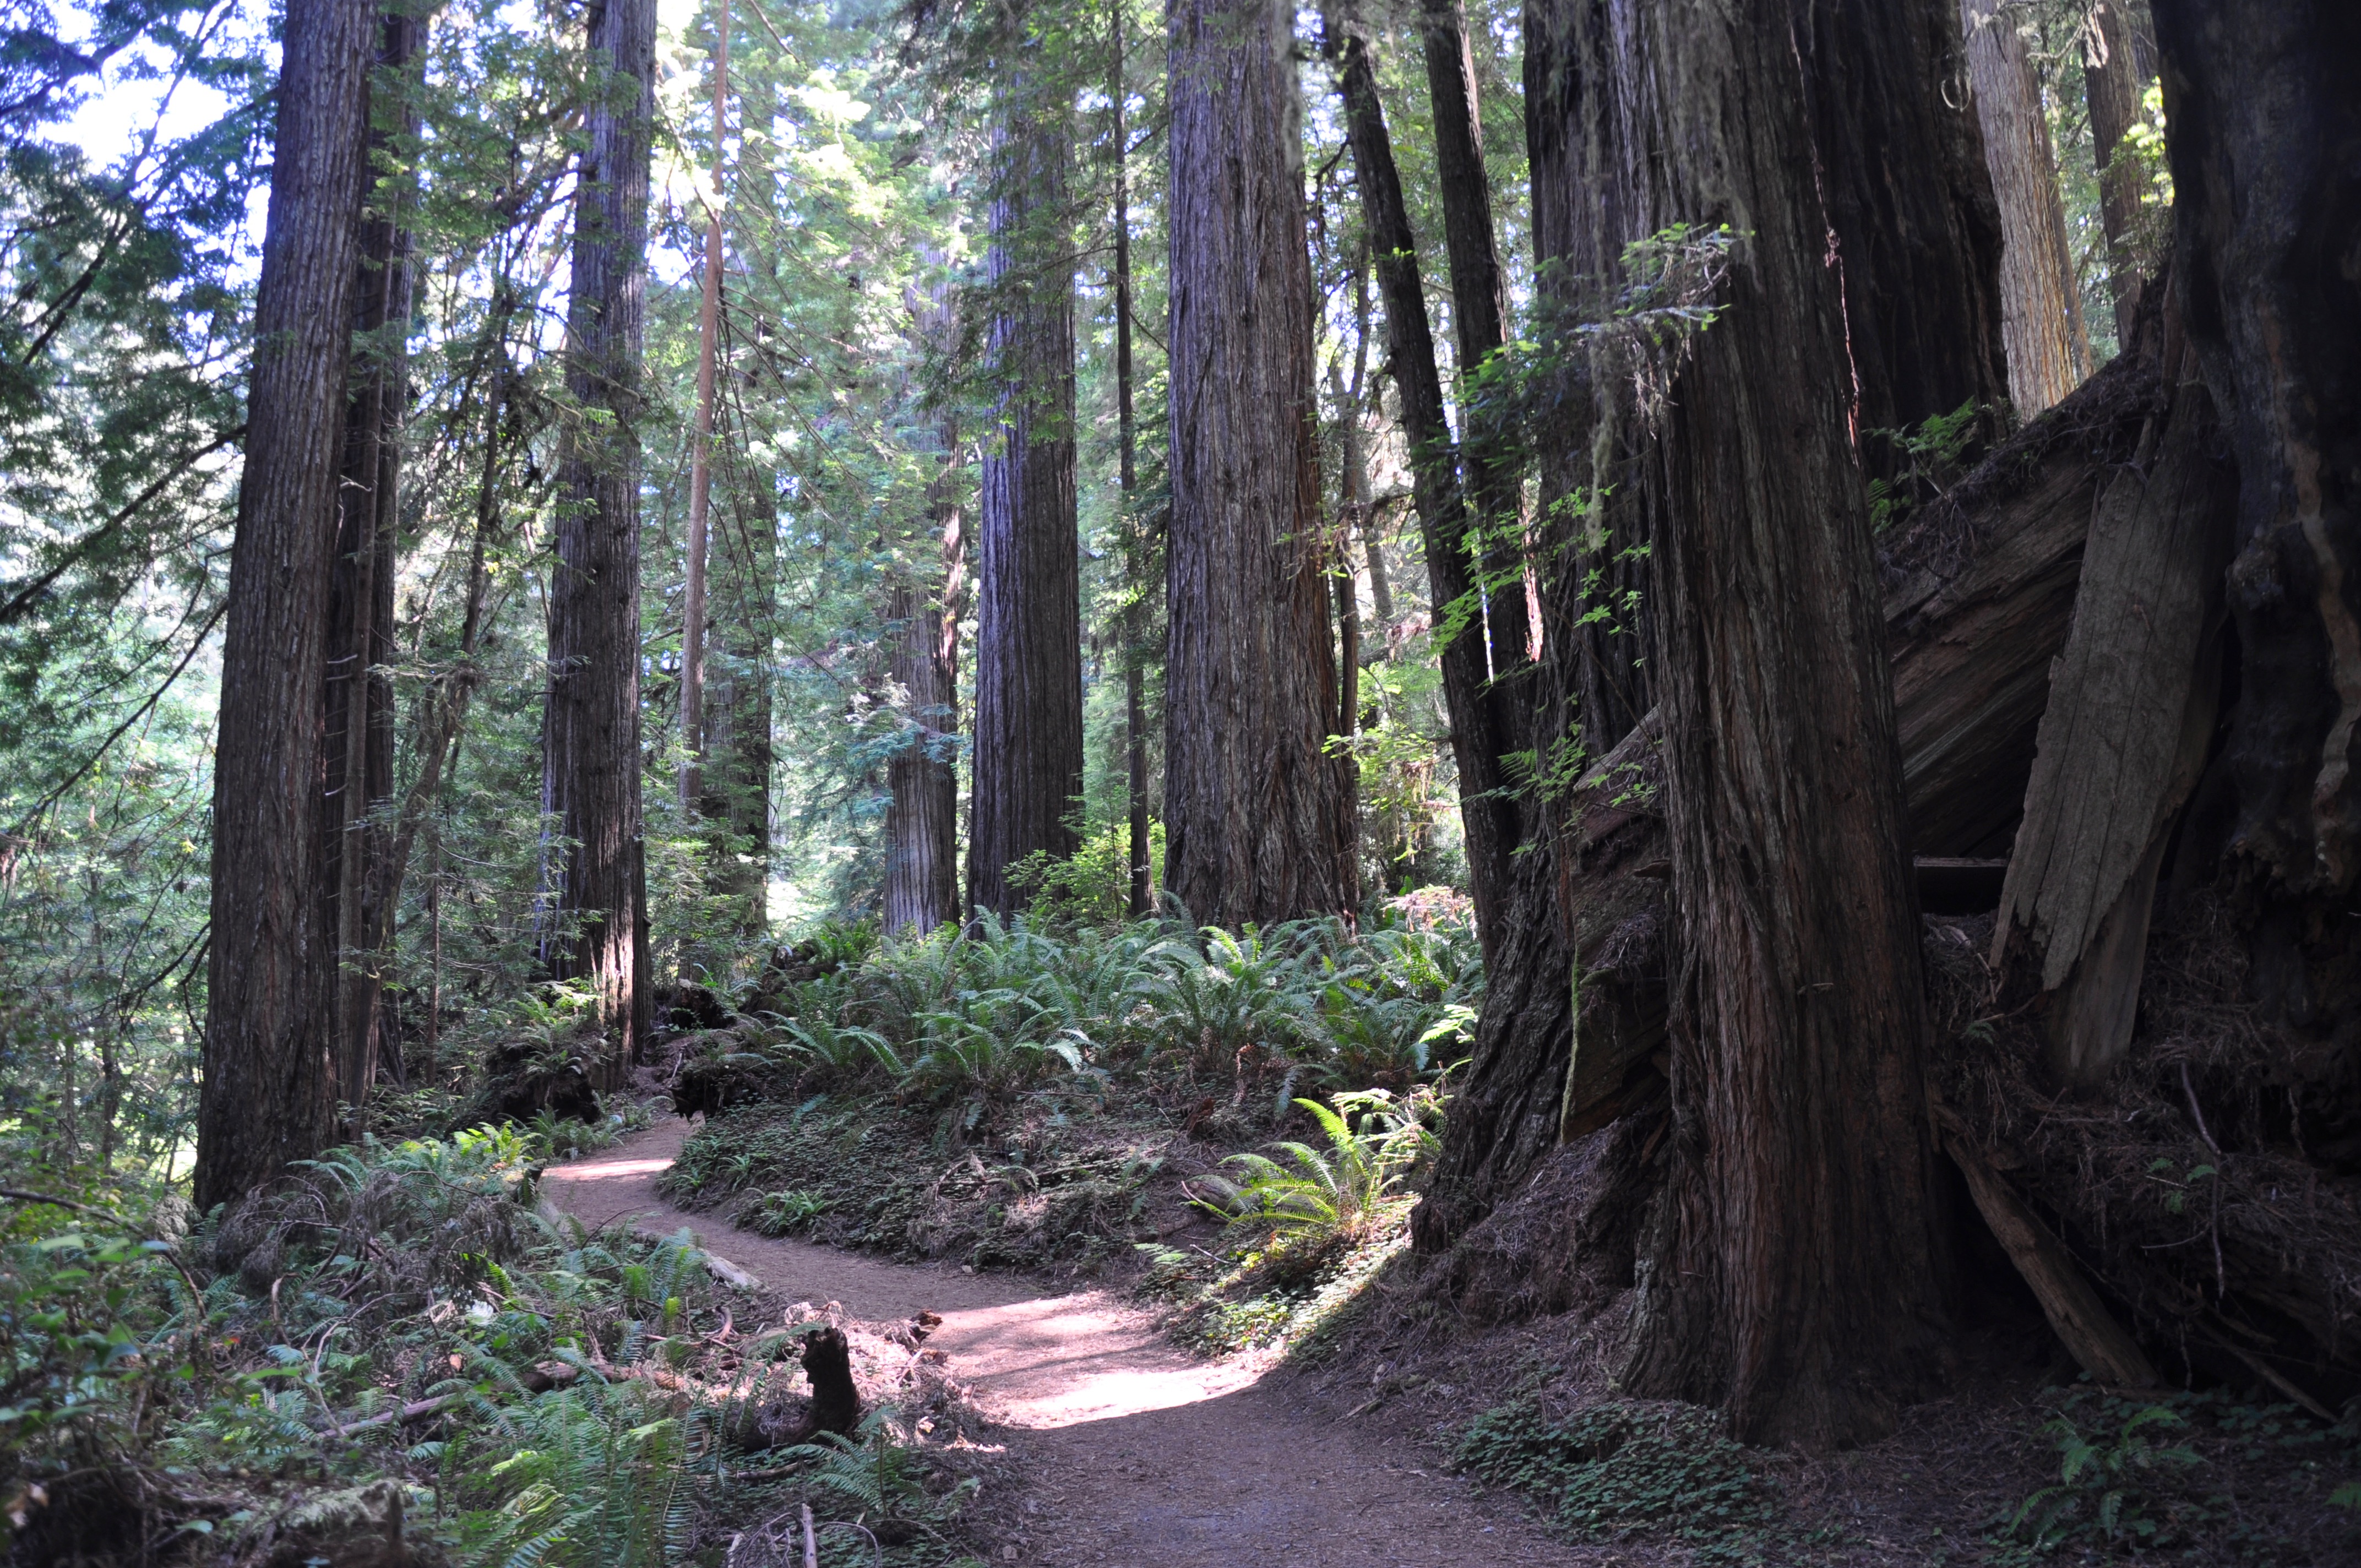 Prairie Creek Trail in California's Redwoods and Beaches